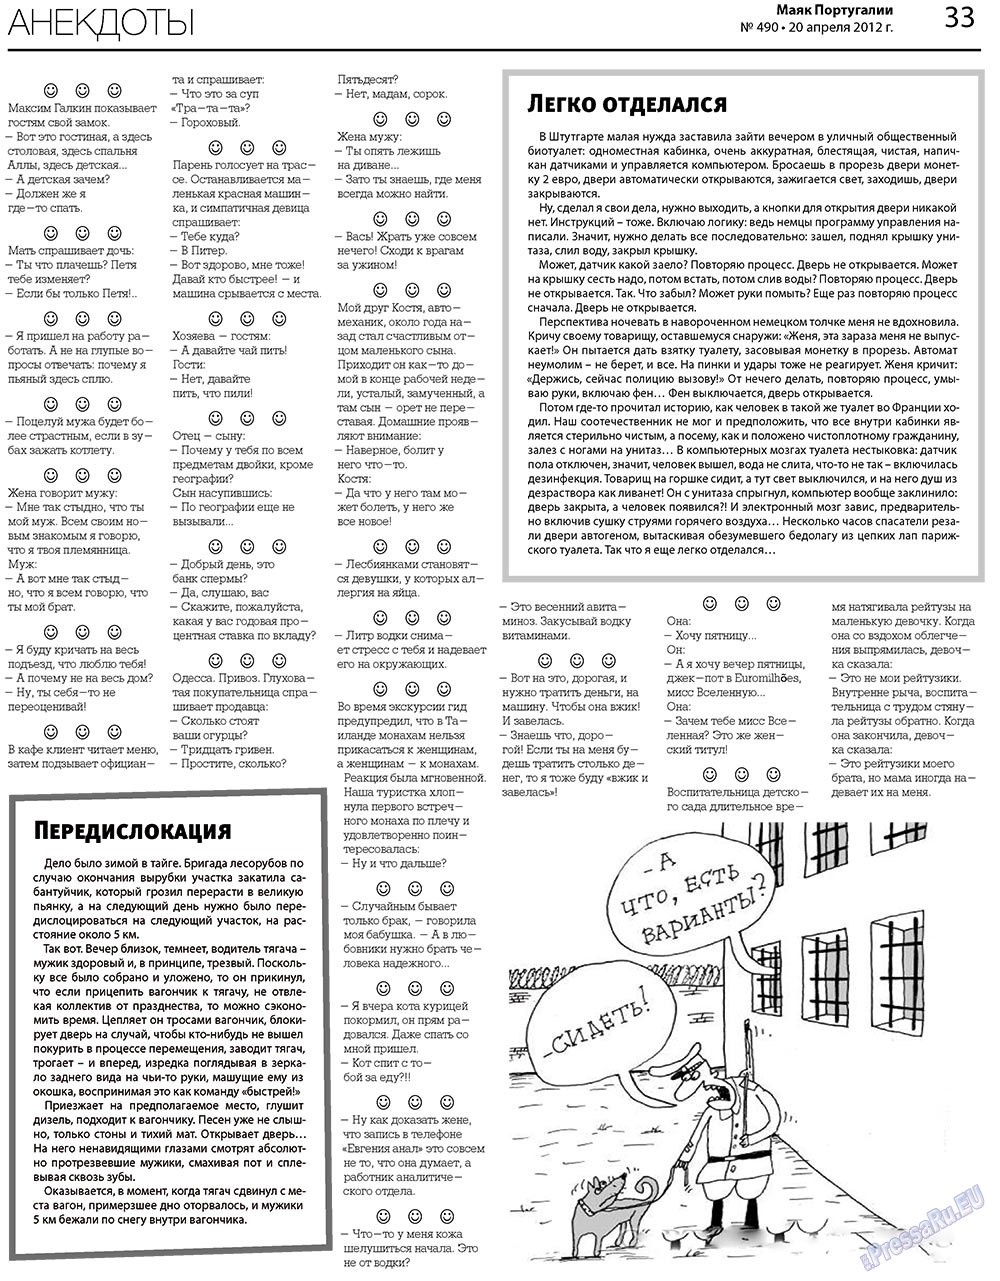 Маяк Португалии, газета. 2012 №490 стр.33